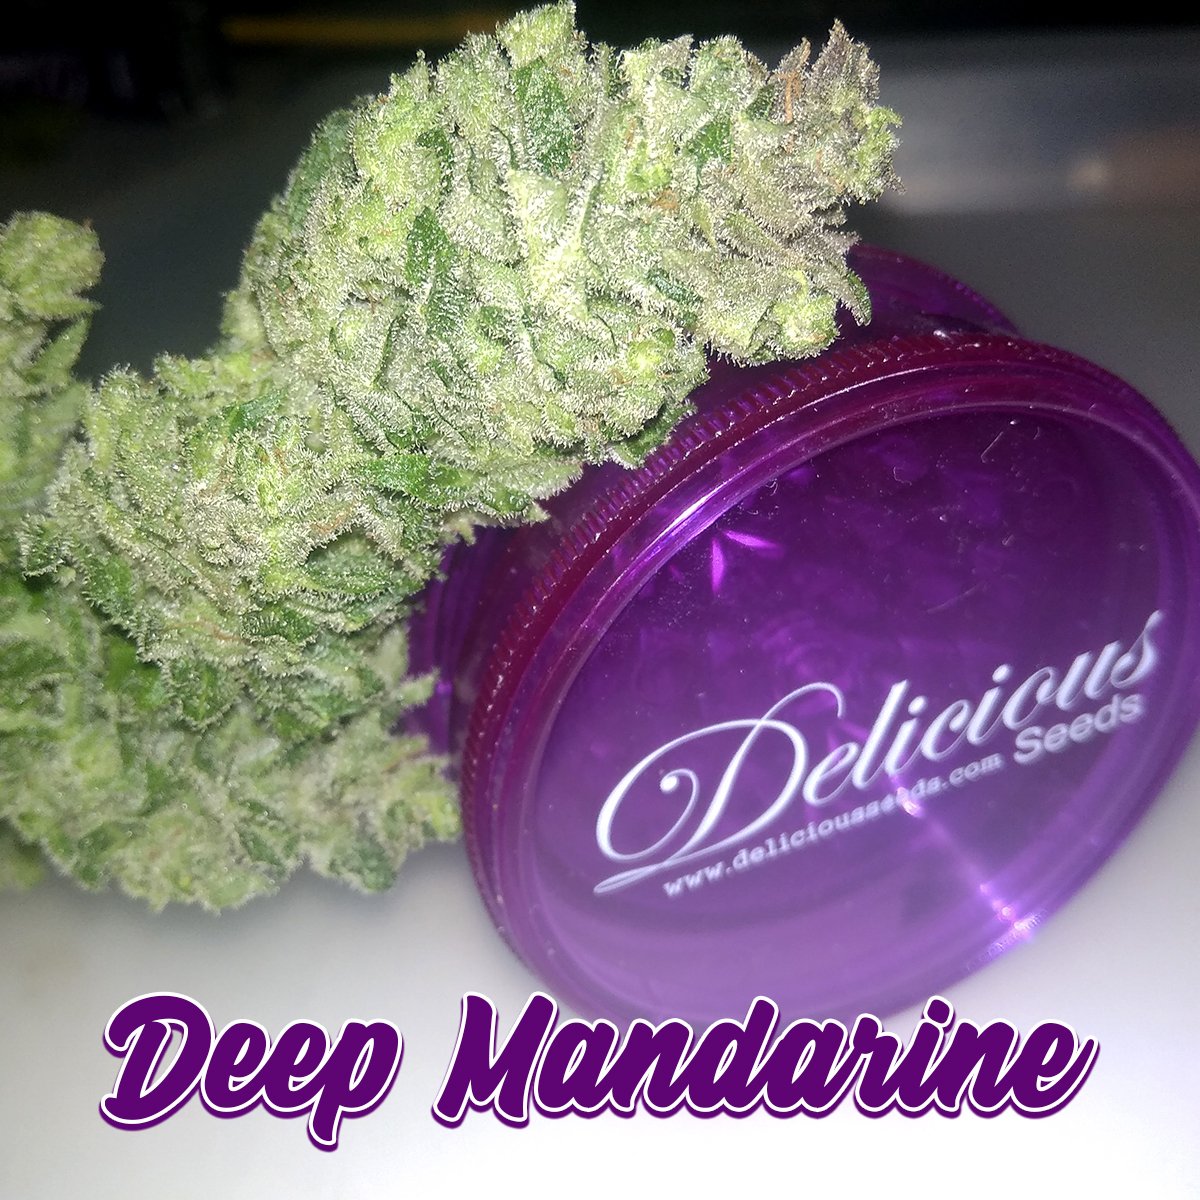 💜🍊#DeepMandarine 🍊💜🌱 #DeliciousSeeds #LifeIsDelicious #CannabisStrains #CannabisSeeds #CannabisCommunity #Cannabis #CannabisPlant #CBD #Medicinal #indica #indicastrain #cannabisindica